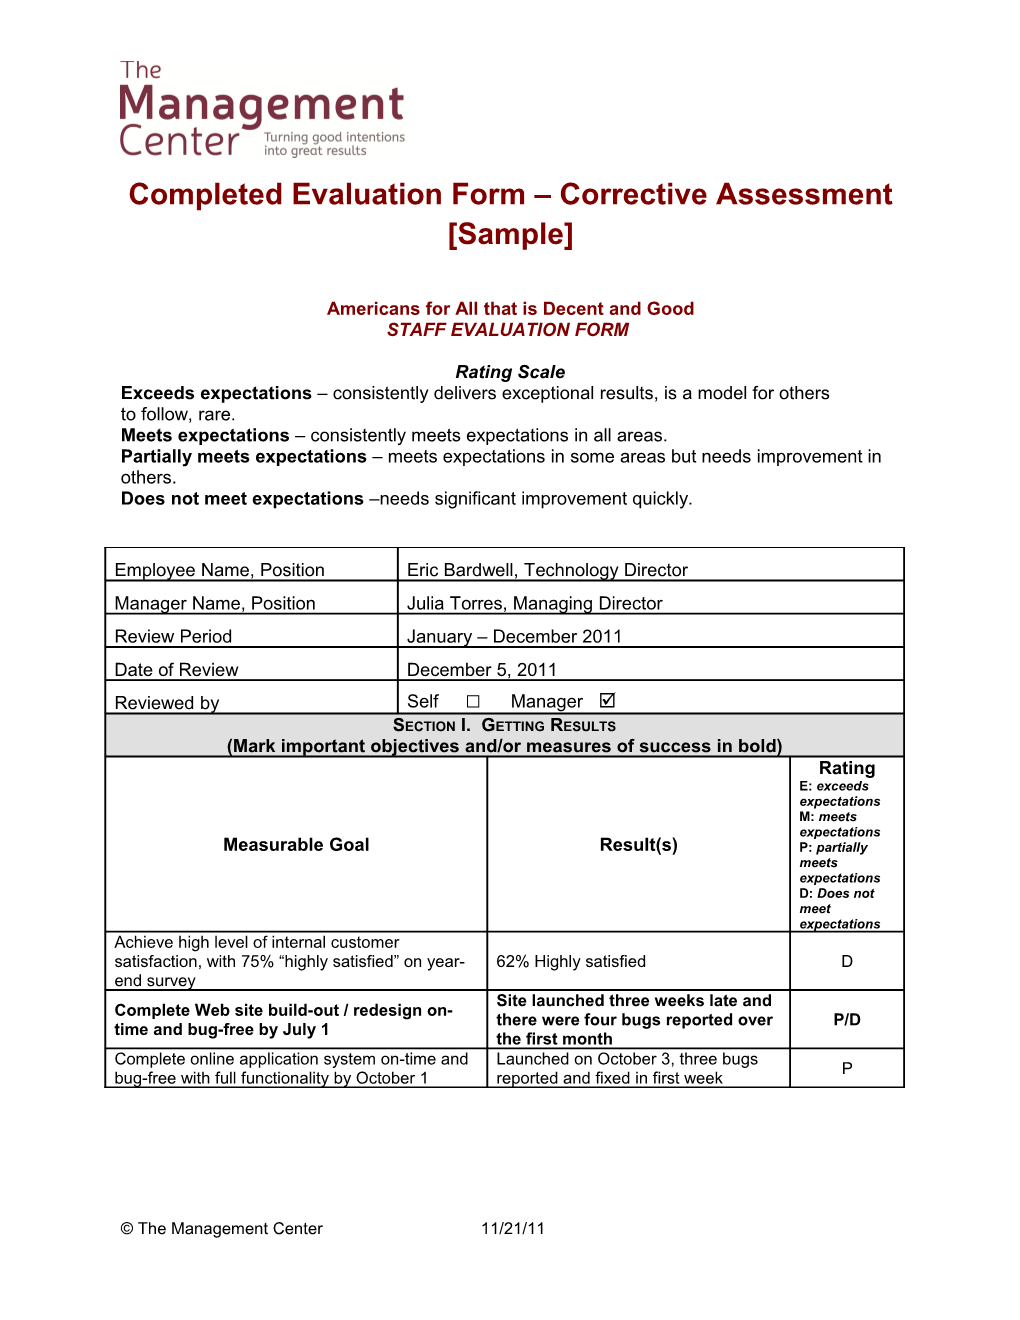 Completed Evaluation Form Corrective Assessment Sample